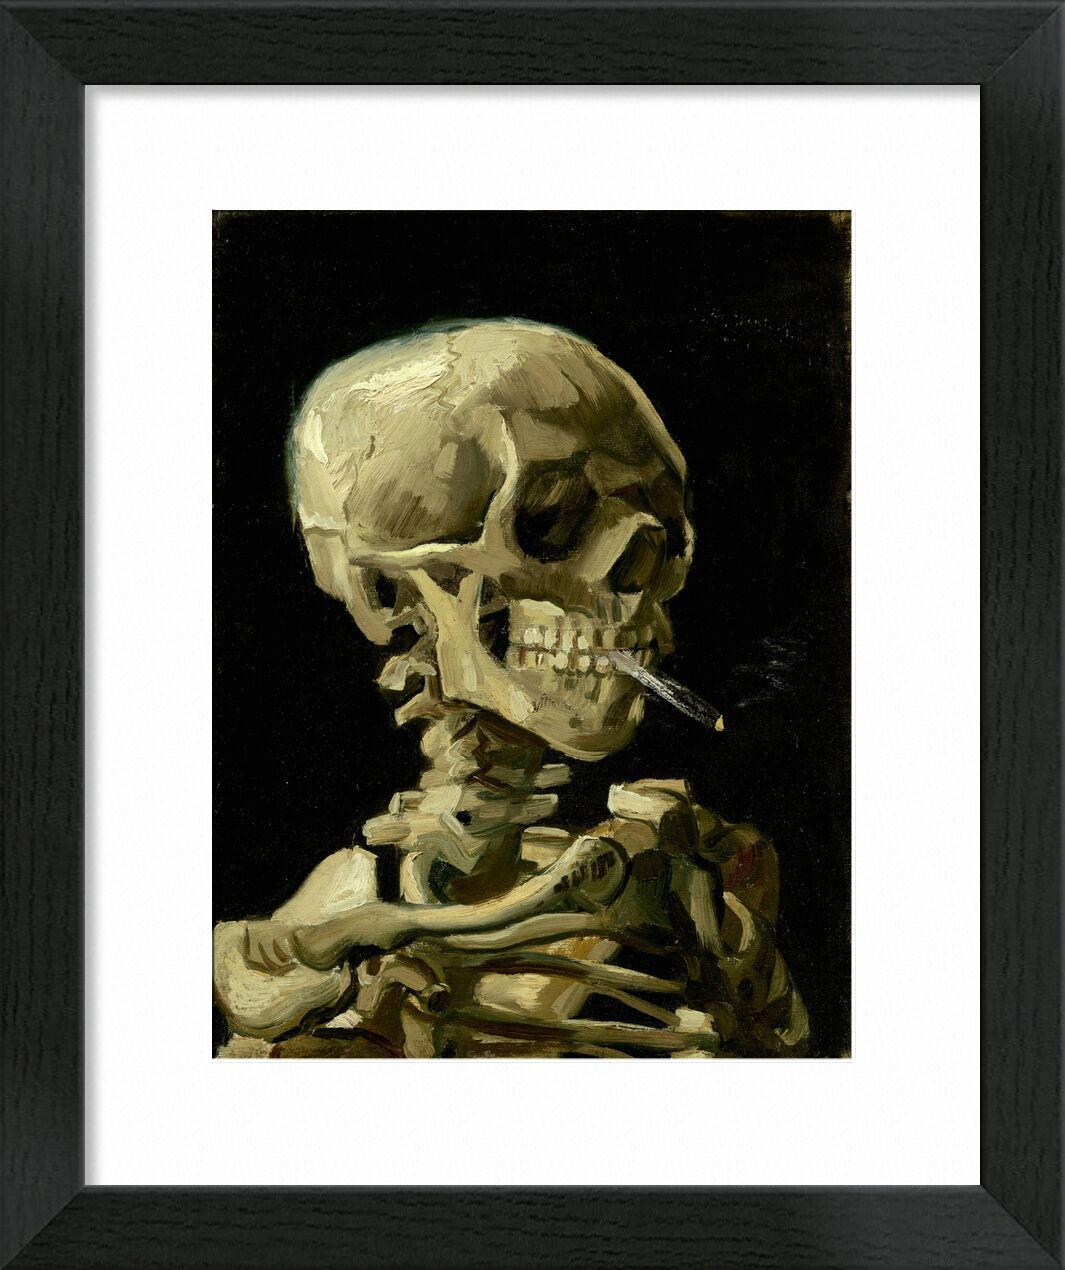 Head of a Skeleton with a Burning Cigarette - VINCENT VAN GOGH desde Bellas artes, Prodi Art, oscuro, VINCENT VAN GOGH, tripas, esqueleto, cigarrillo, muerte, fumar, fumar, negro